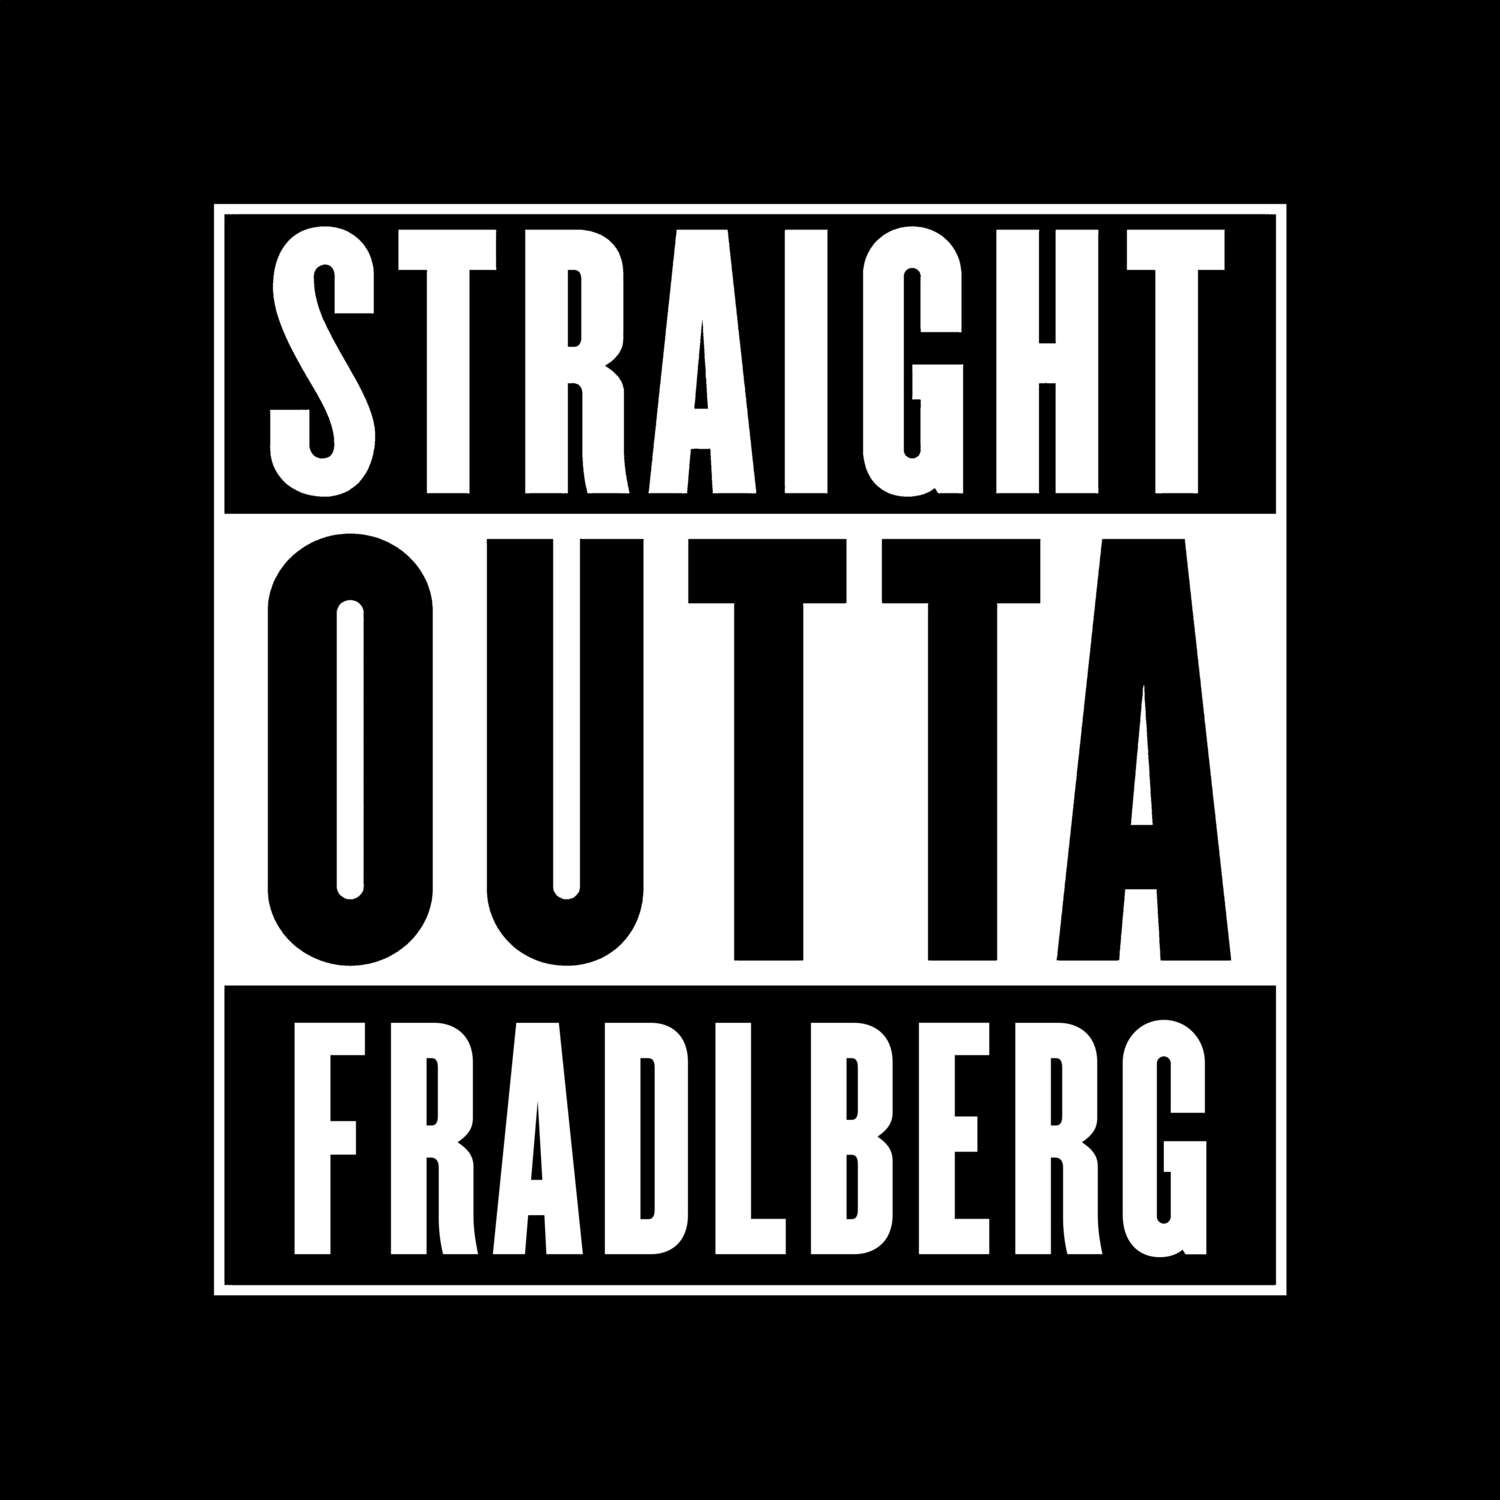 Fradlberg T-Shirt »Straight Outta«